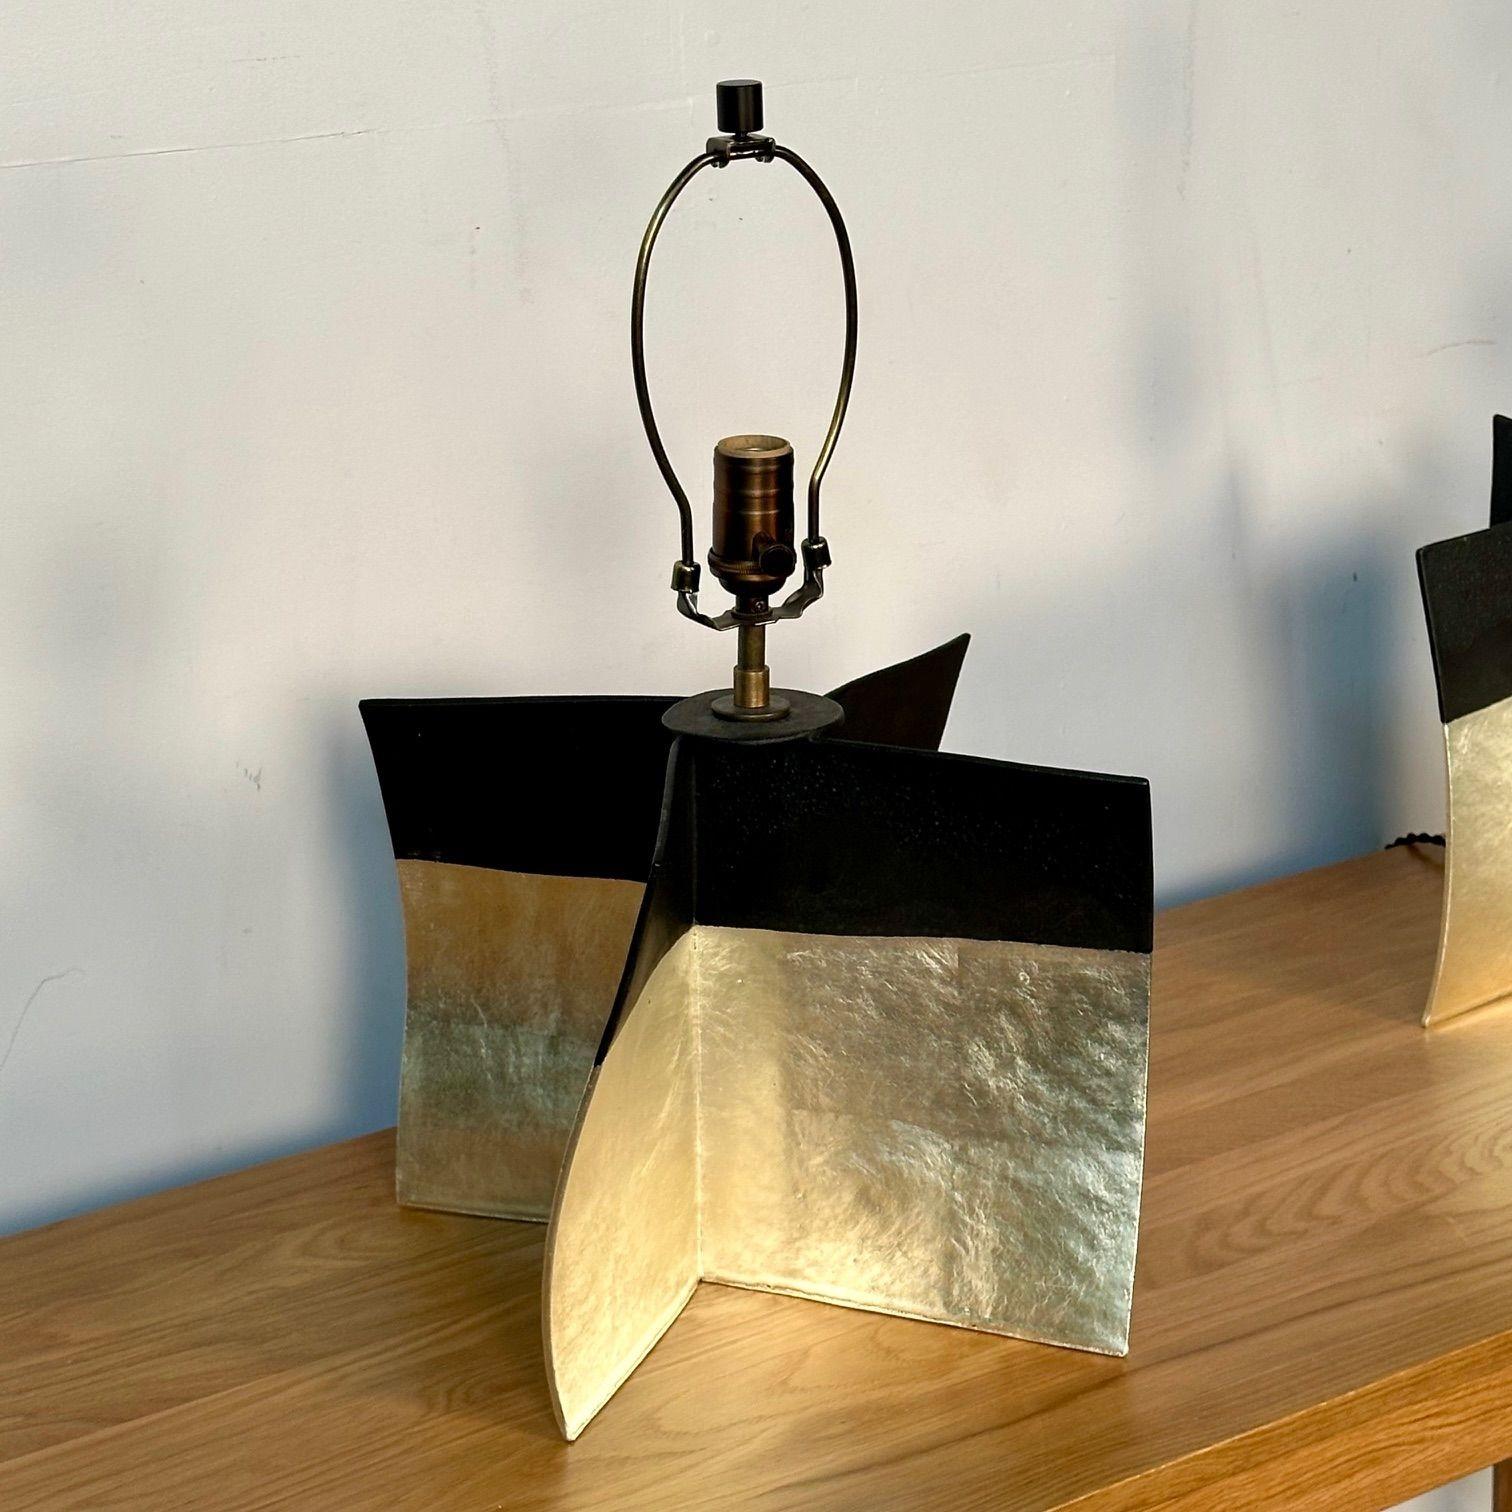 Dumais Made, Contemporary, Ceramic Croisillon Table Lamps, Gold Glaze, 2021 For Sale 1